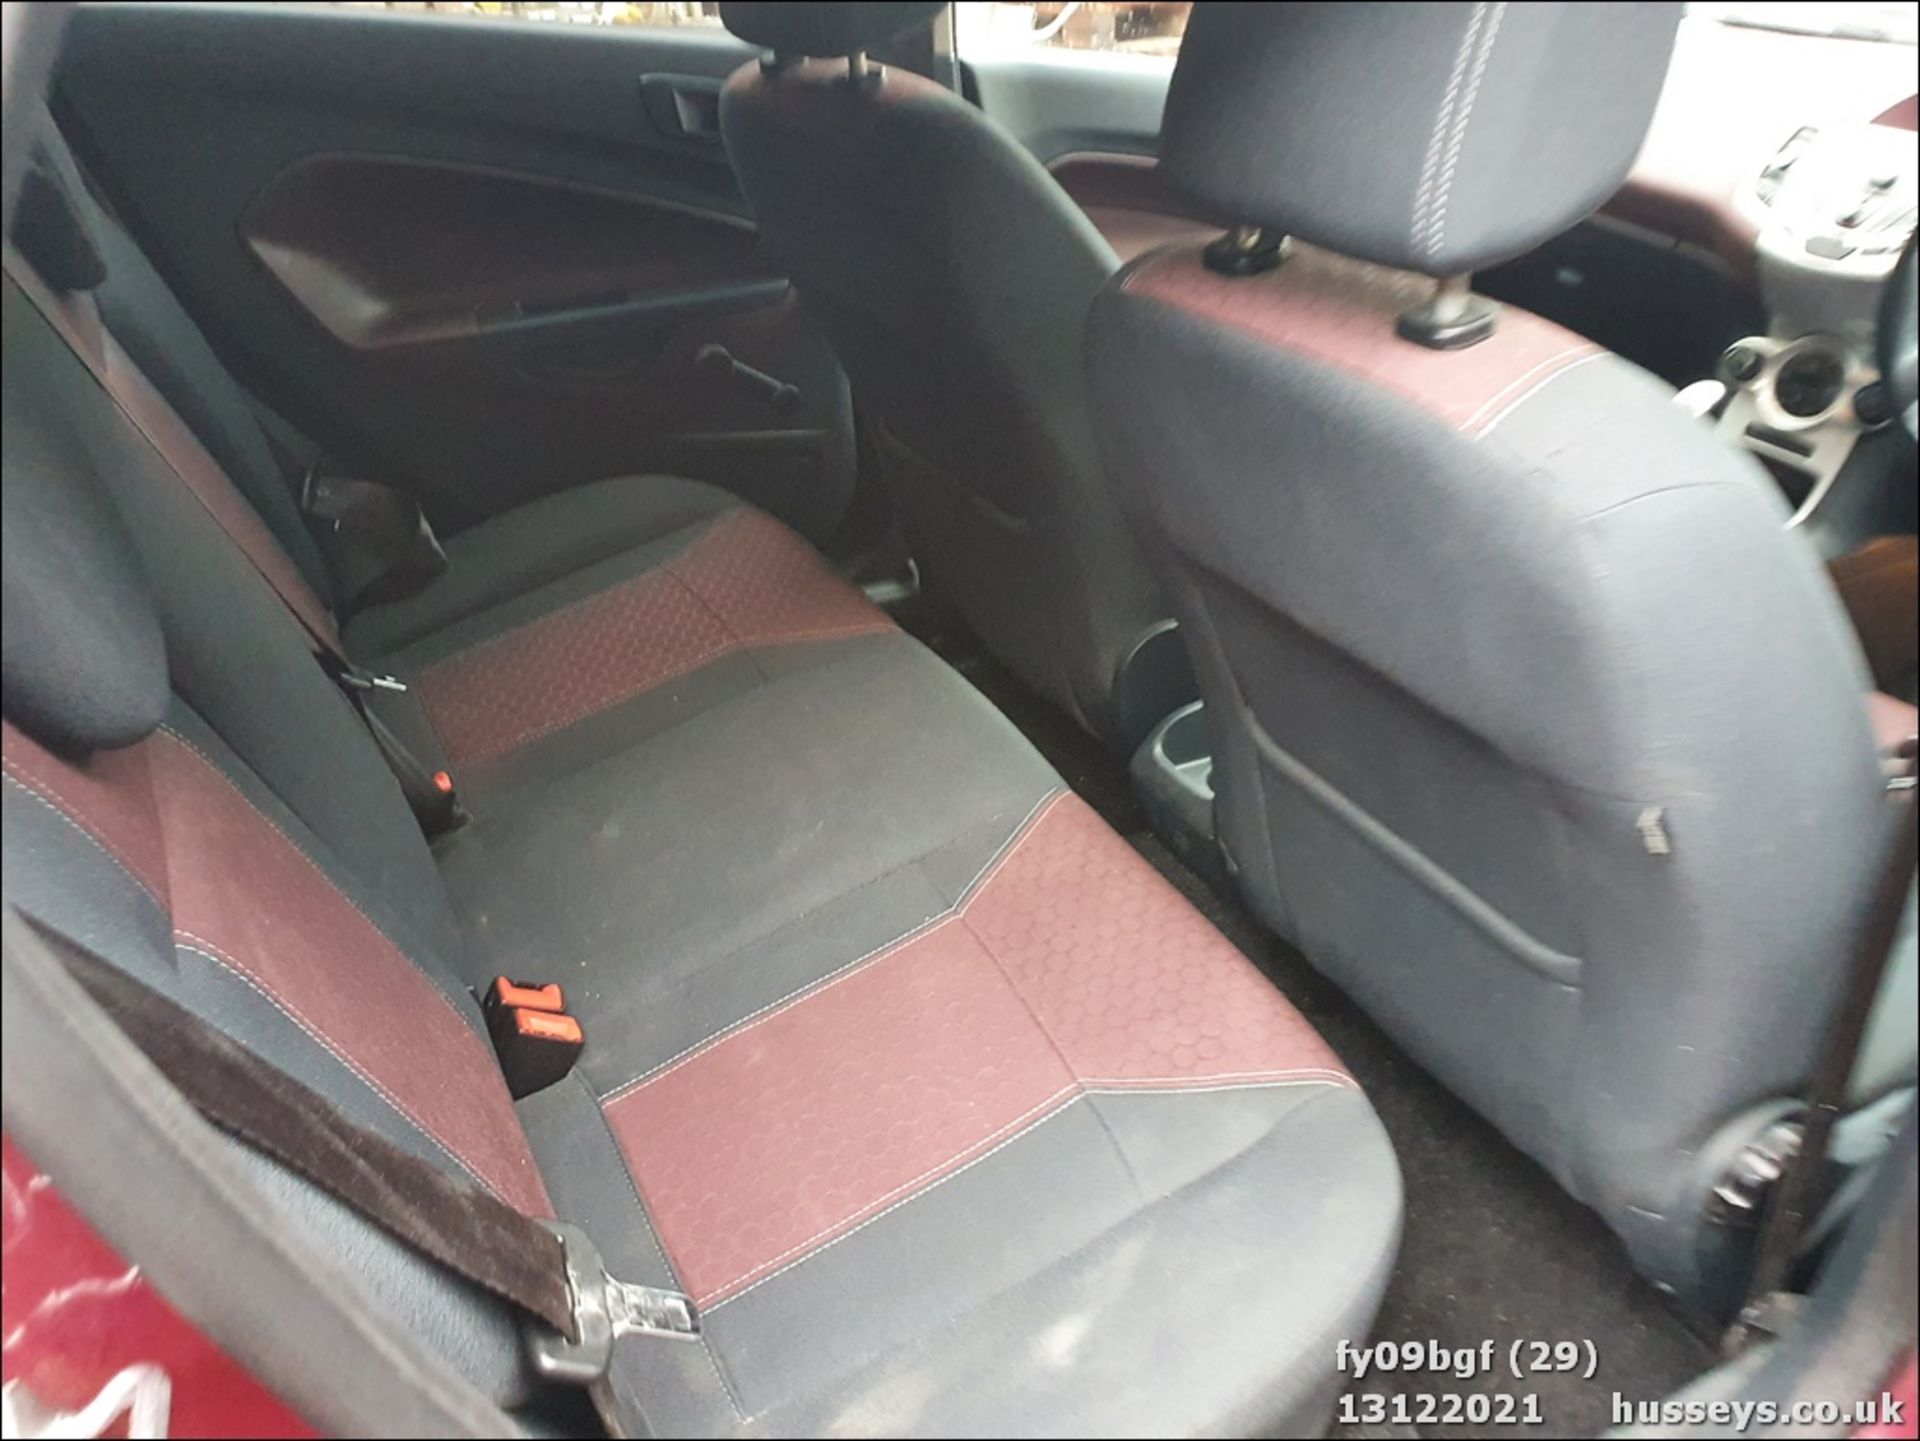 09/09 FORD FIESTA TITANIUM 90 TDCI - 1560cc 5dr Hatchback (Red, 125k) - Image 29 of 34